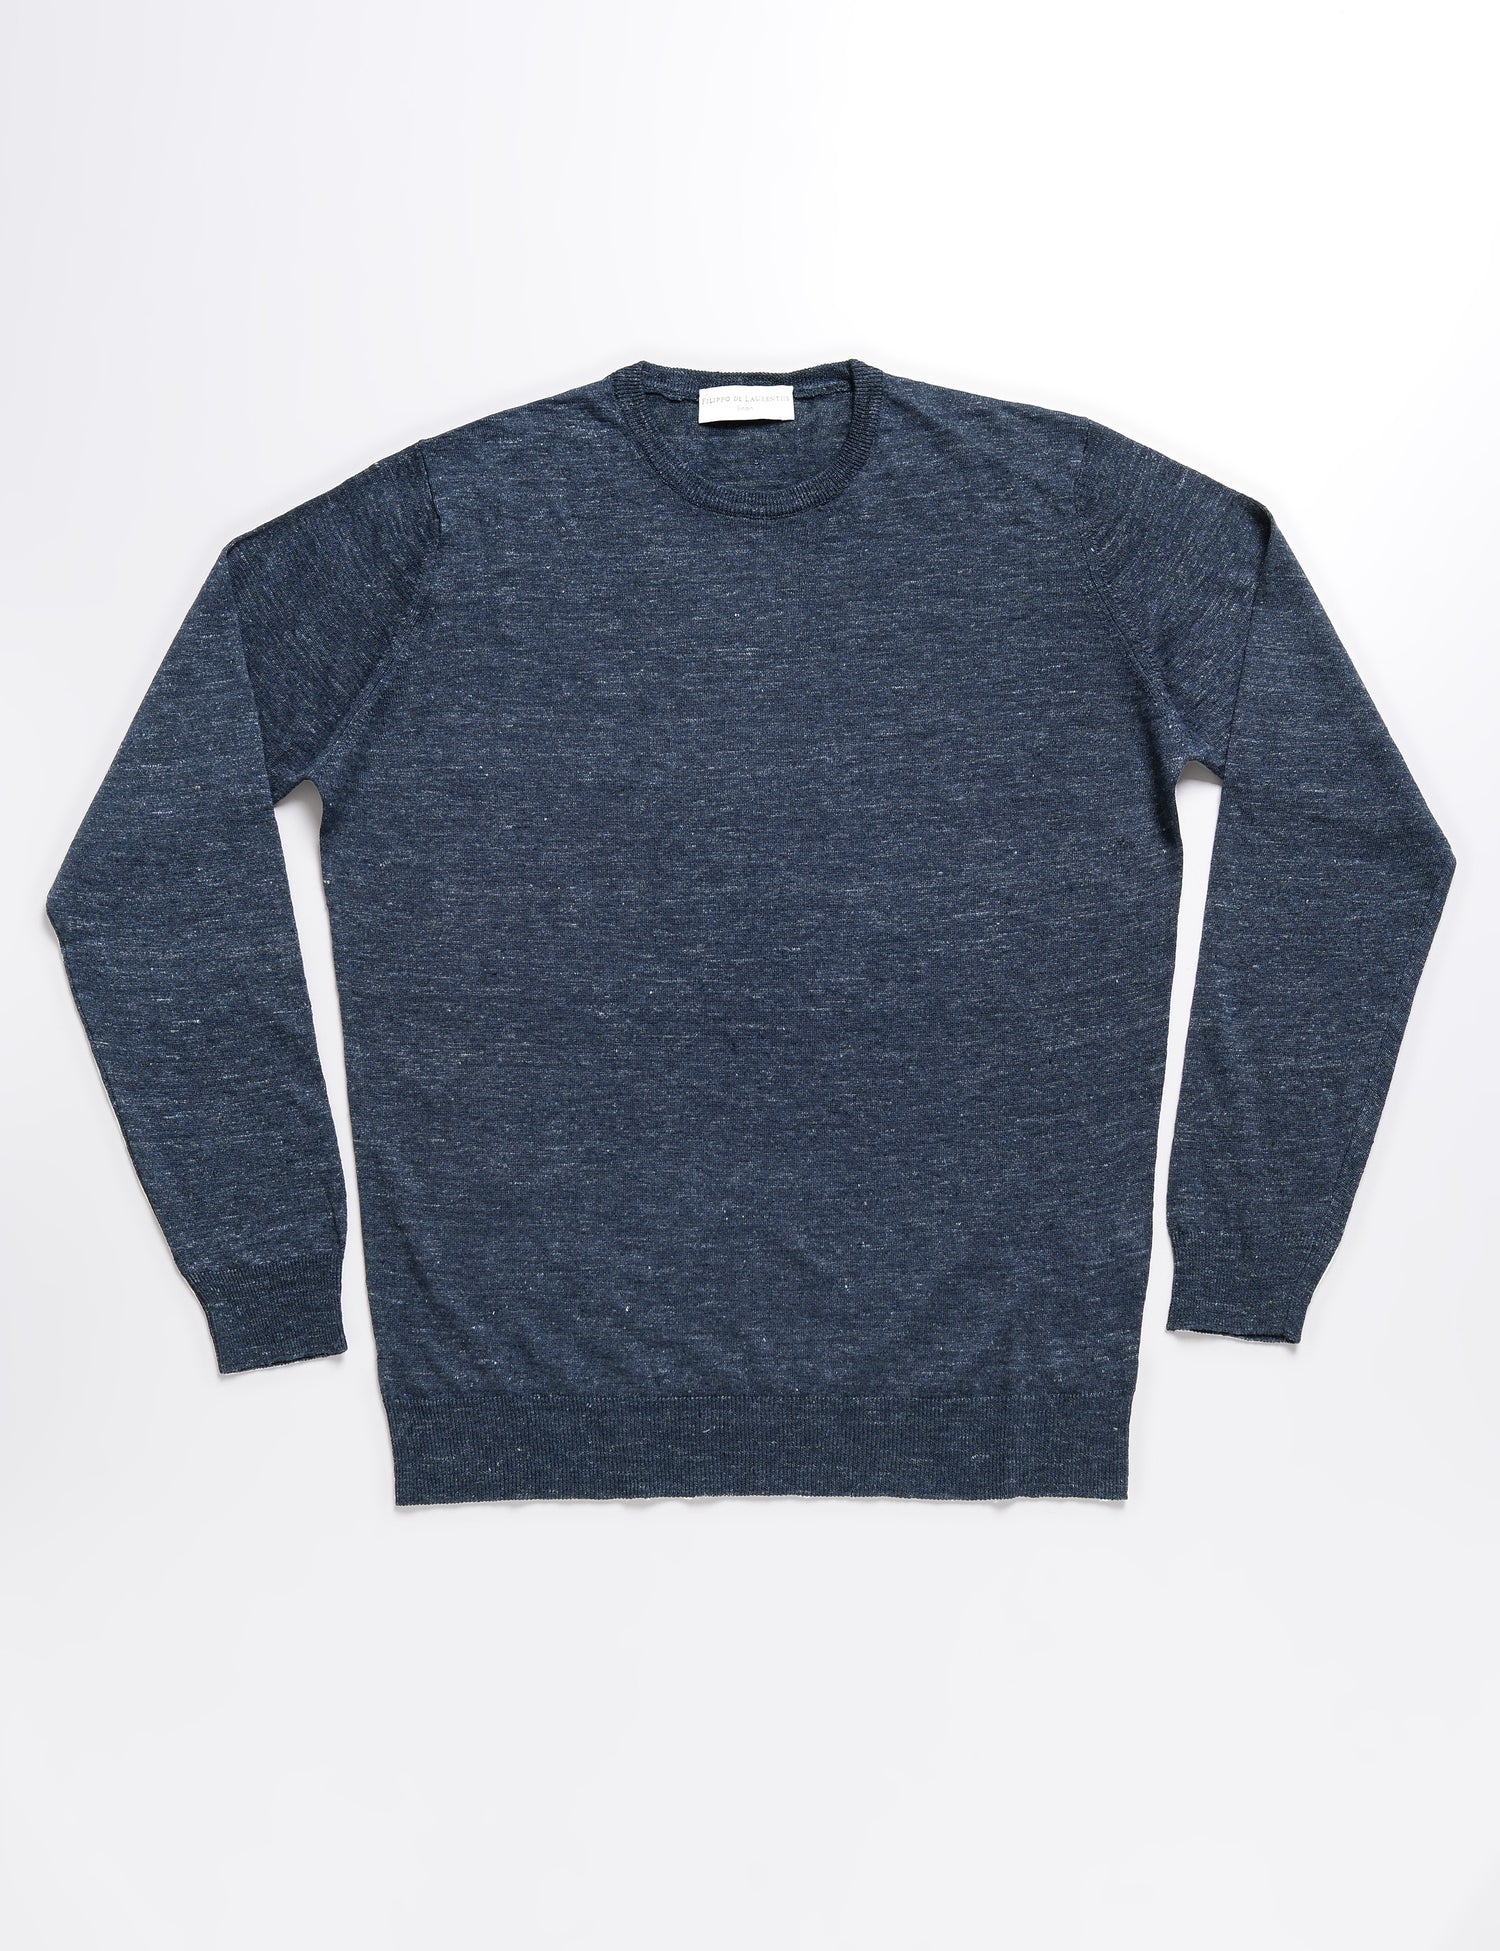 Full length flat shot of Filippo de Laurentiis Linen/Cotton Crewneck Sweater - Heathered Charcoal